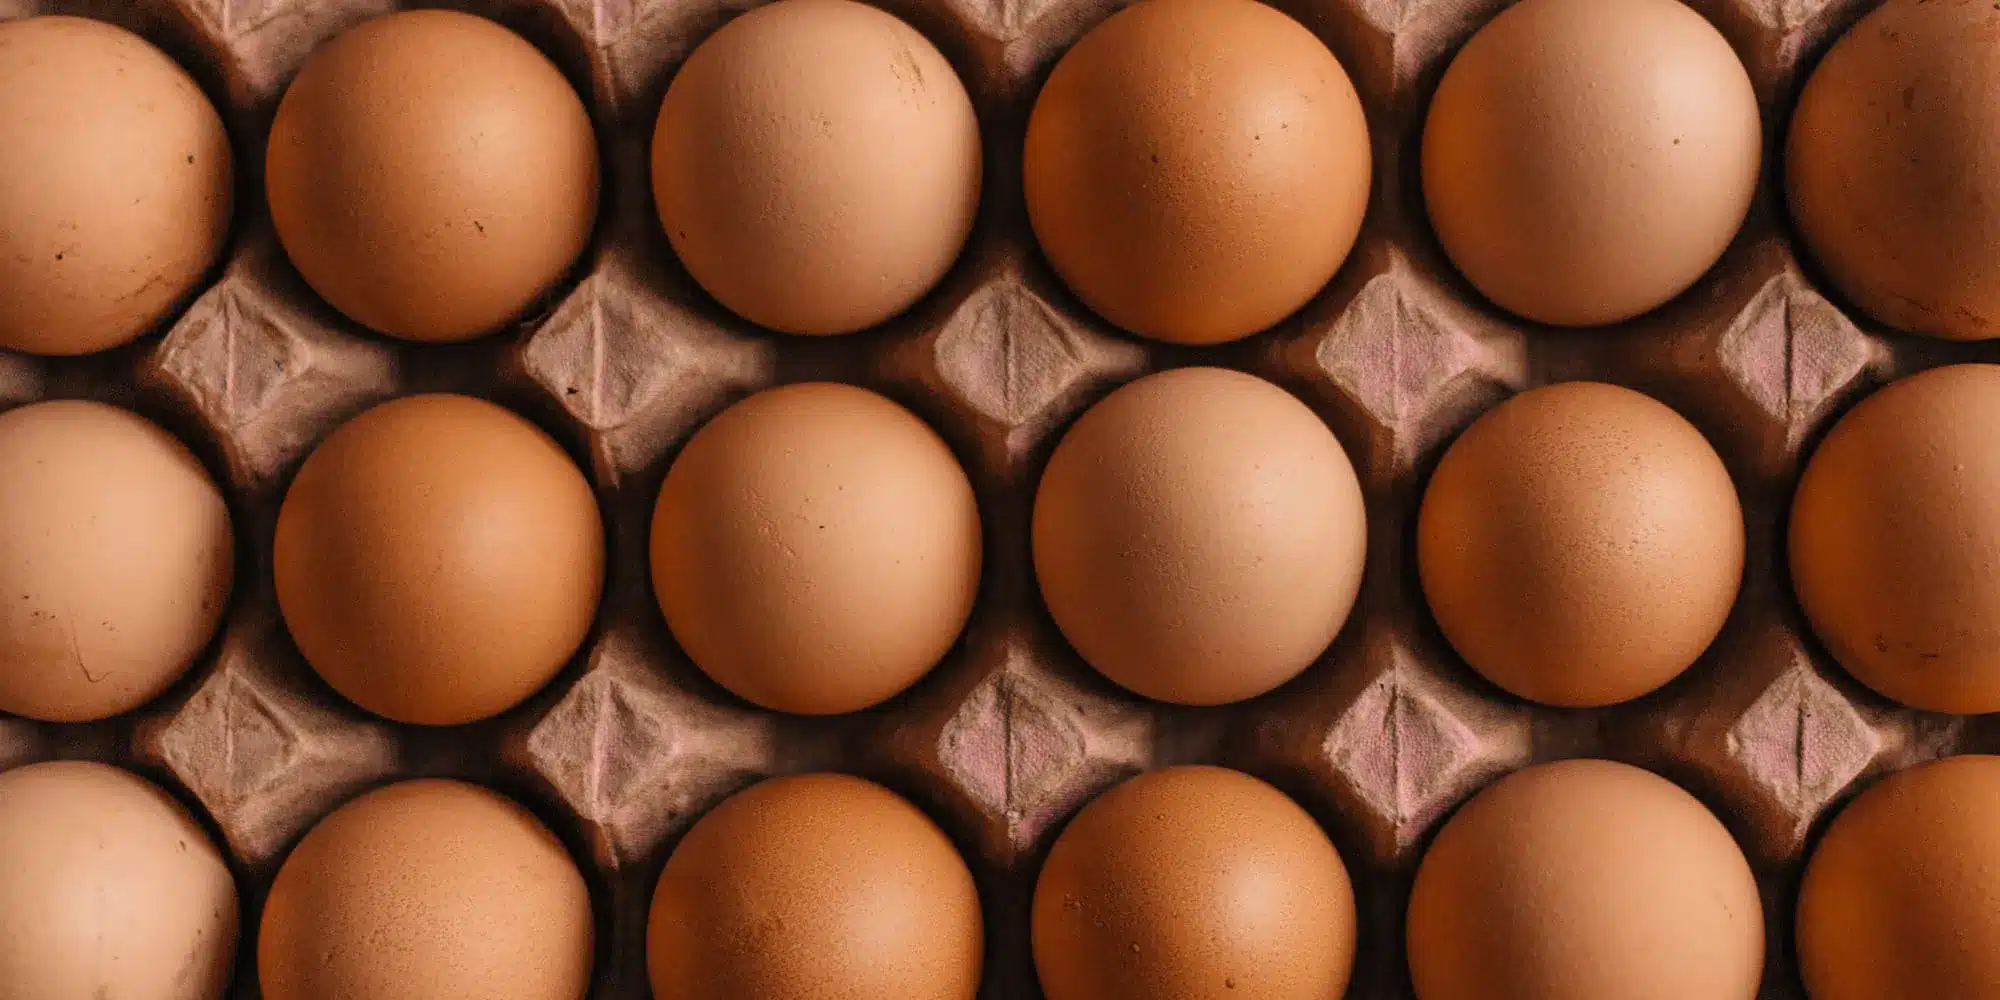 Supermarket retailers start rationing eggs due to avian flu outbreak